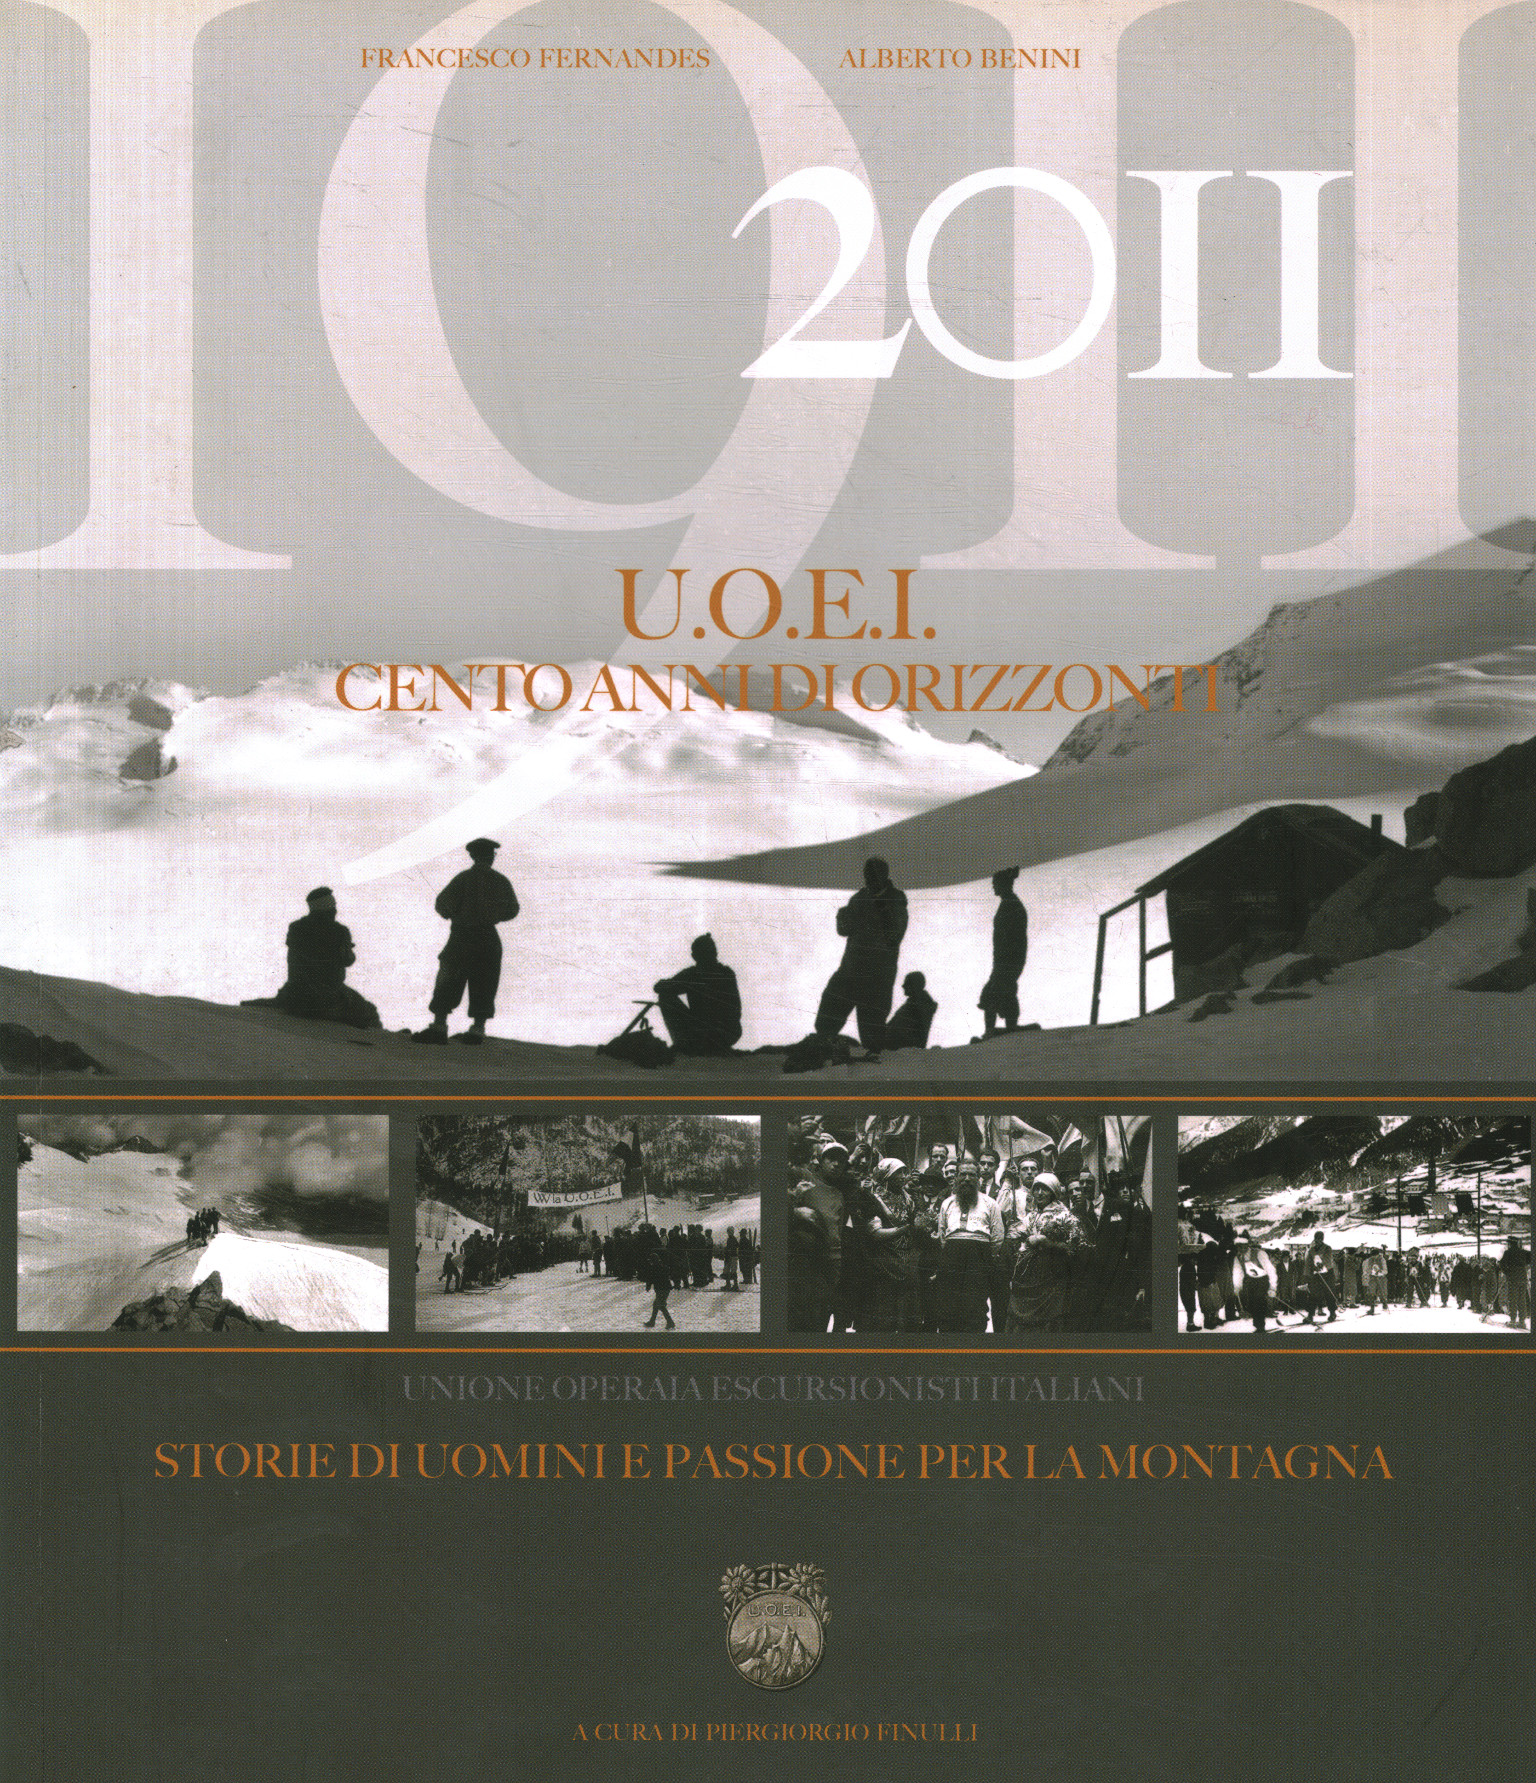 1911-2011 U.O.E.I. One hundred years of horizon